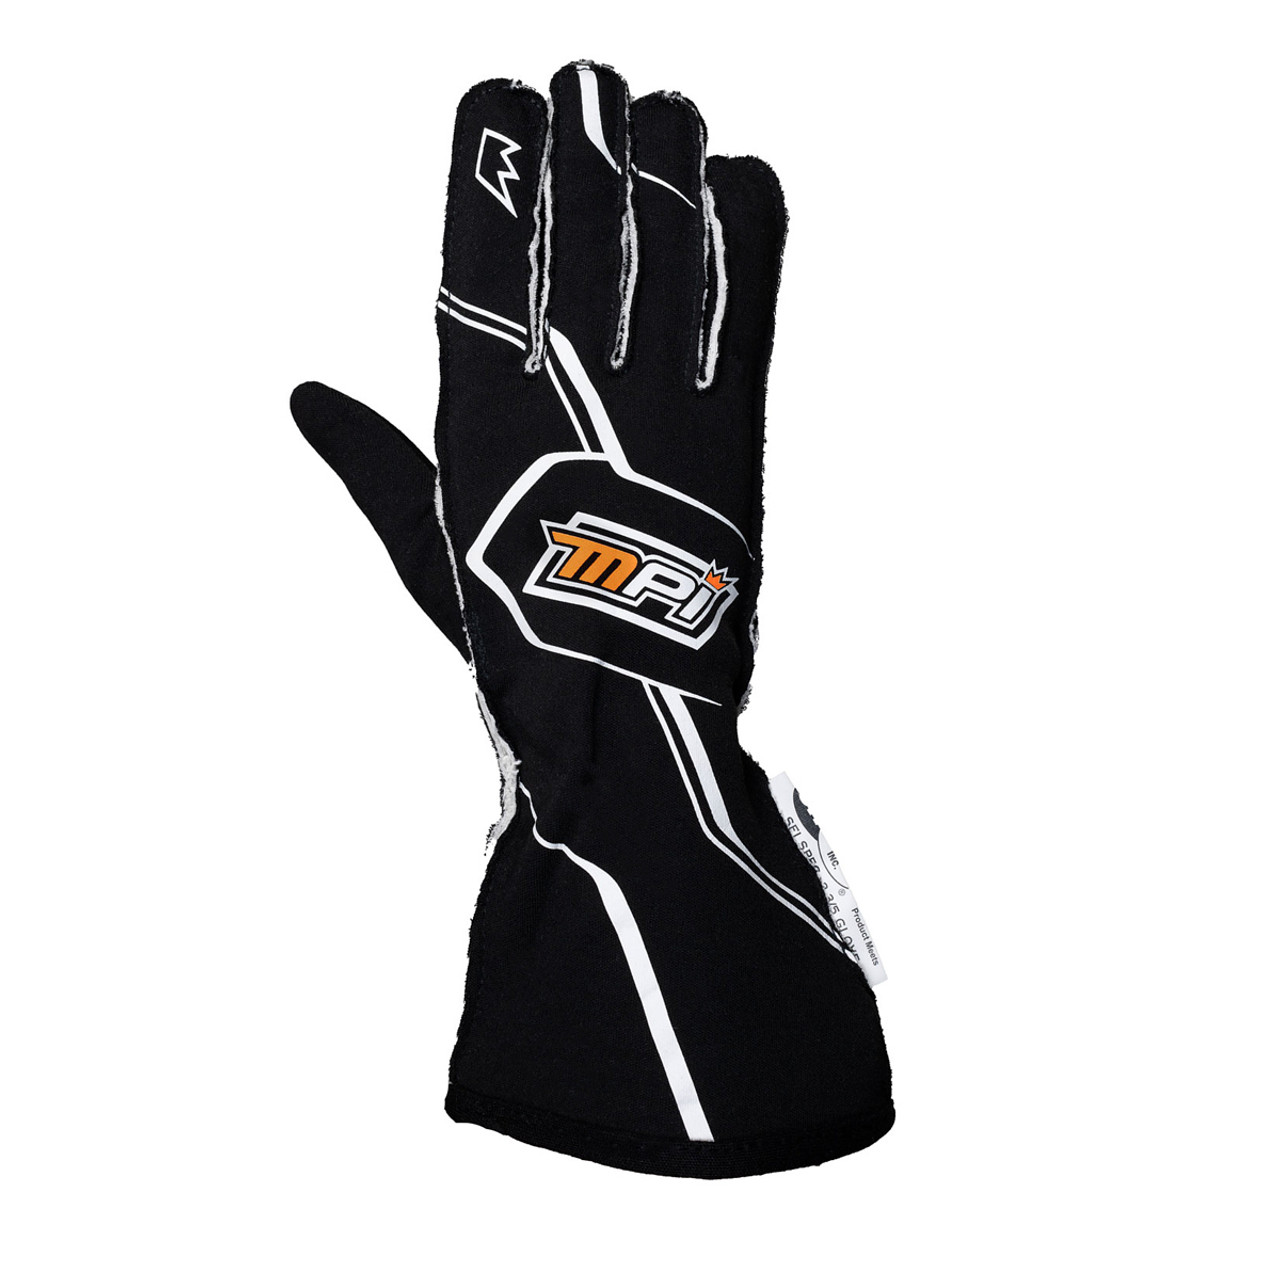 MPI Racing Gloves SFI 3.3/5 Black Large